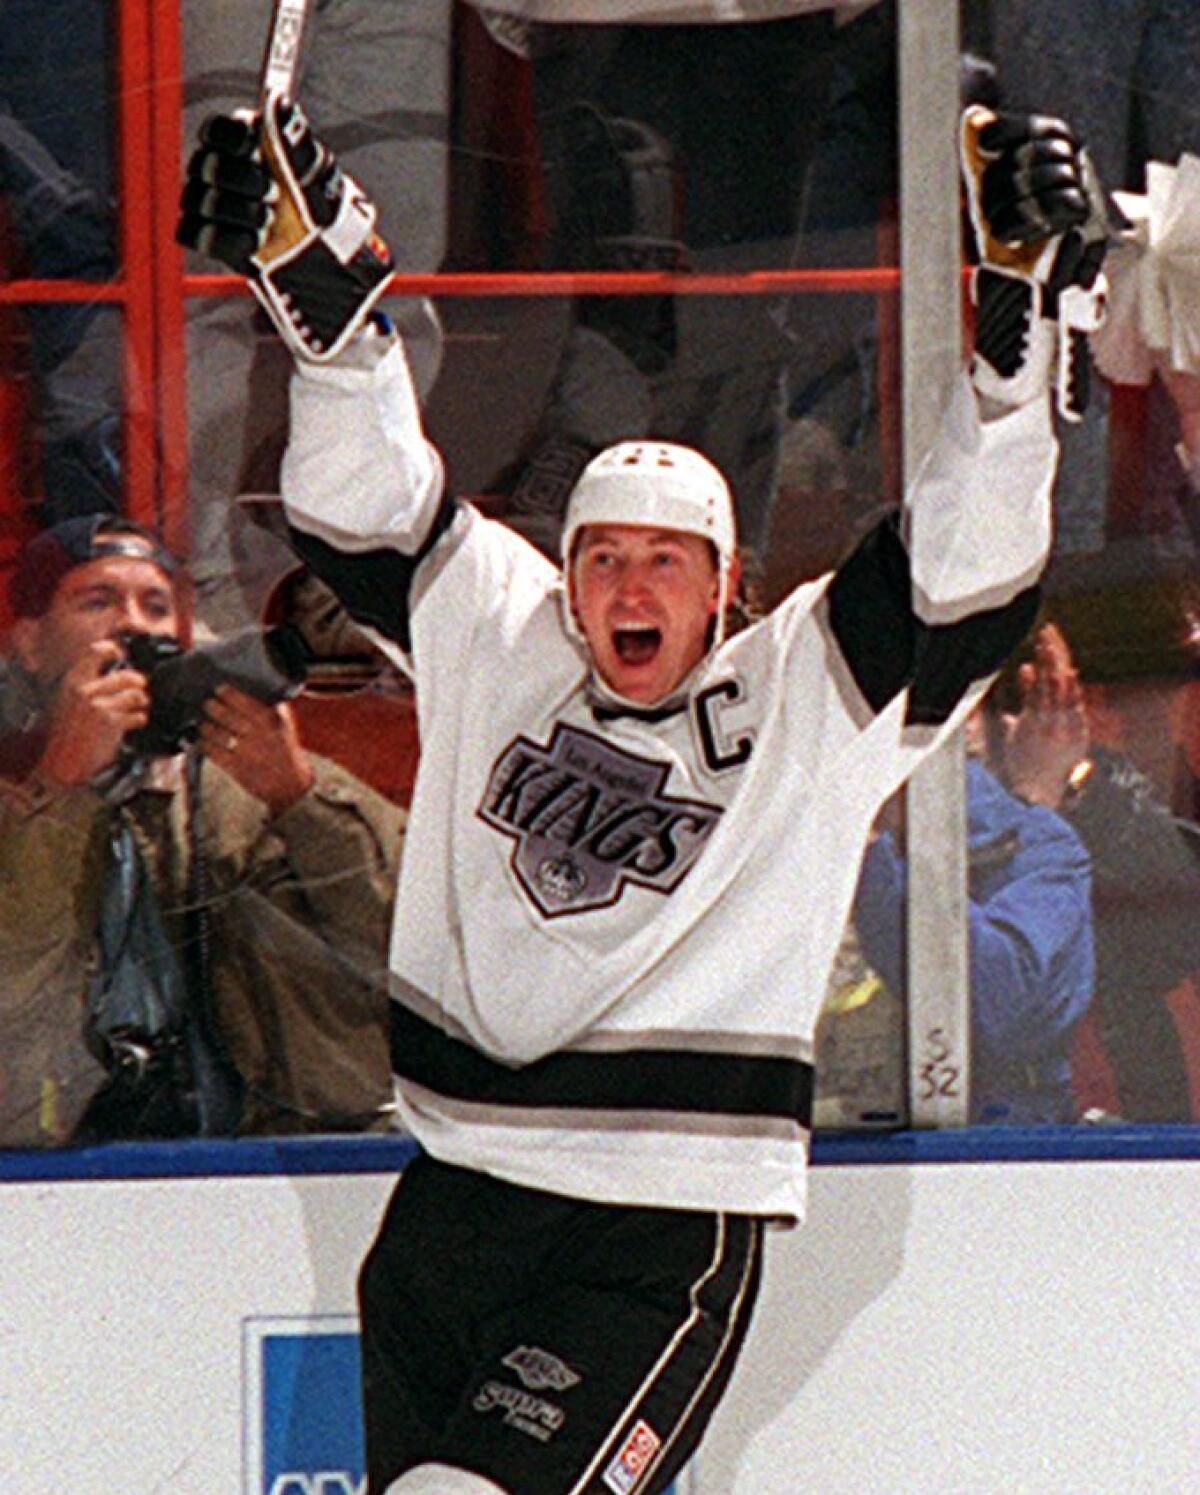 March 23, 1994: Wayne Gretzky scores goal No. 802 to break Gordie Howe's record.